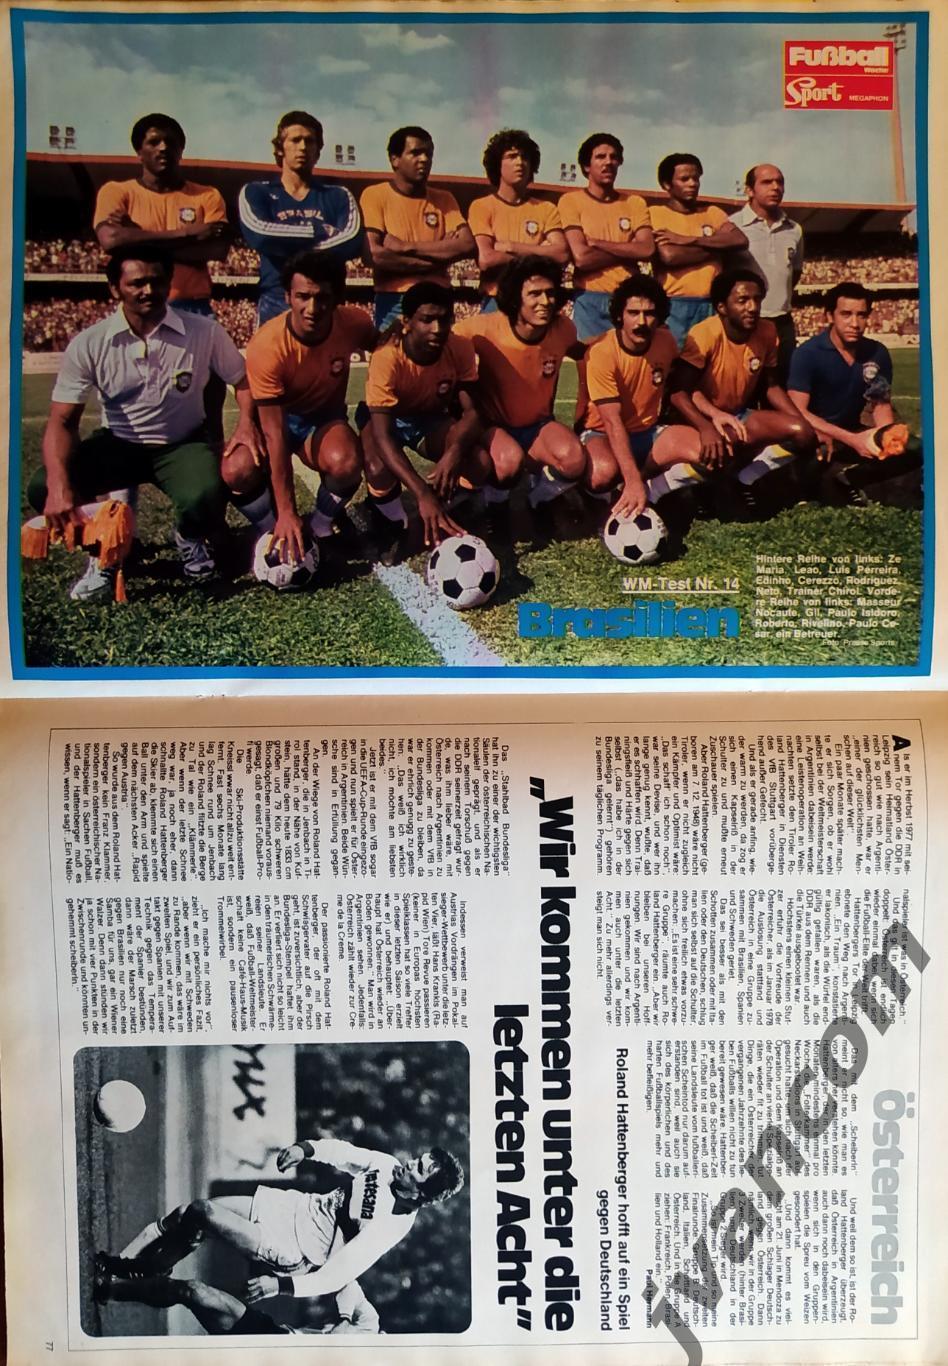 FUSSBALL WOCHE. Чемпионат Мира по футболу 1978 года. Представление участников. 4